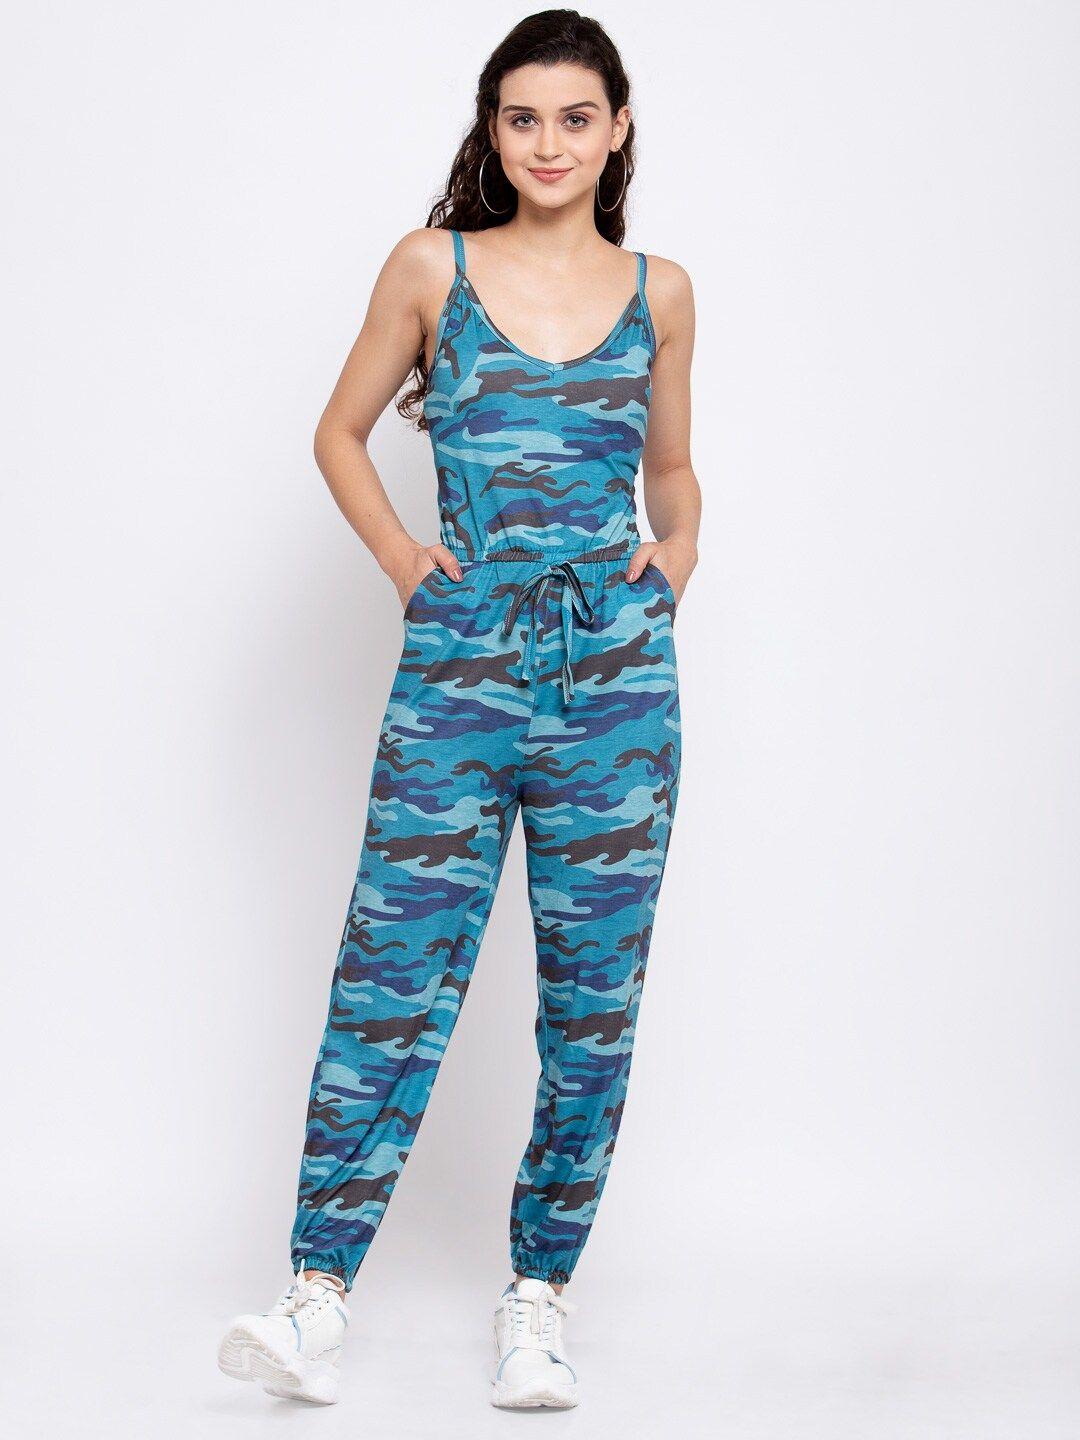 iki chic women blue & grey camouflage printed basic jumpsuit